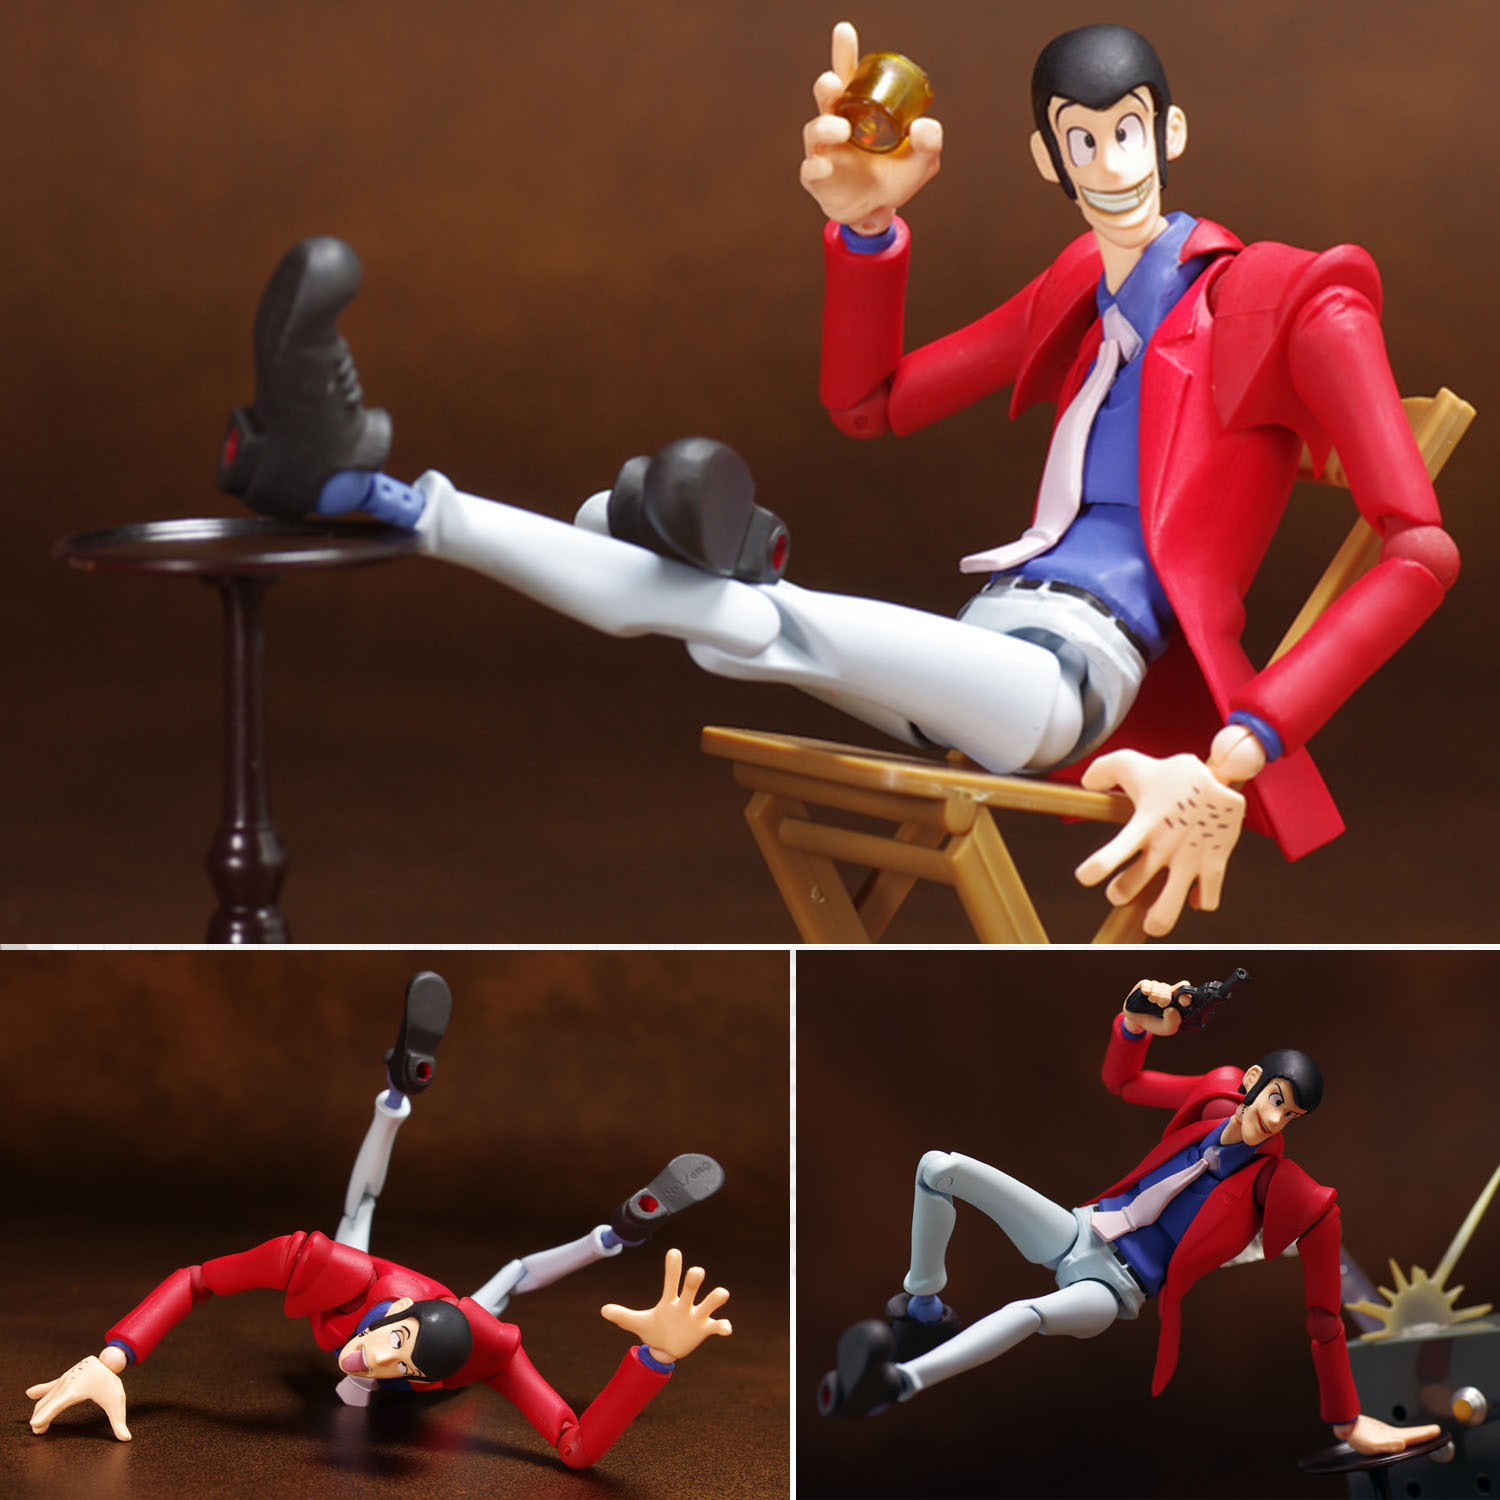 Model โมเดล งานแท้ 100% kaiyodo ไคโยโด จากการ์ตูนเรื่อง Legacy Of Revoltech Lupin The Third จอมโจรลูแปงที่สาม Arsene อาร์แซน Ver Original from Japan Figma ฟิกม่า Anime ขยับแขน-ขาได้ ของขวัญ Gift อนิเมะ การ์ตูน มังงะ Doll ตุ๊กตา manga Figure ฟิกเกอร์